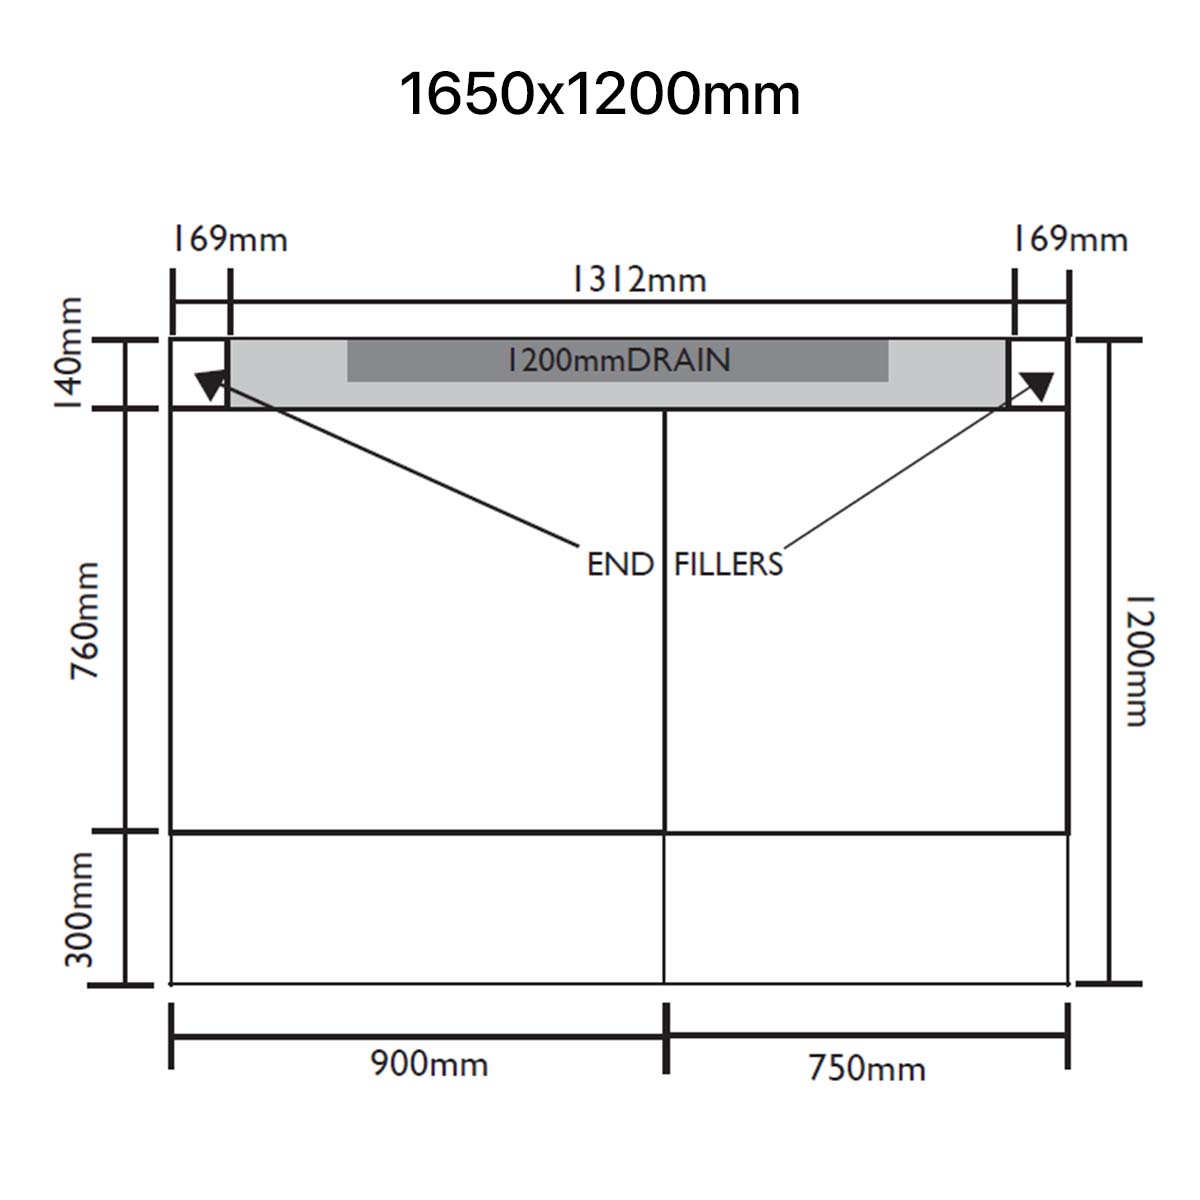 Unislope 1K elegance linear drain 1650x1200mm dimensions